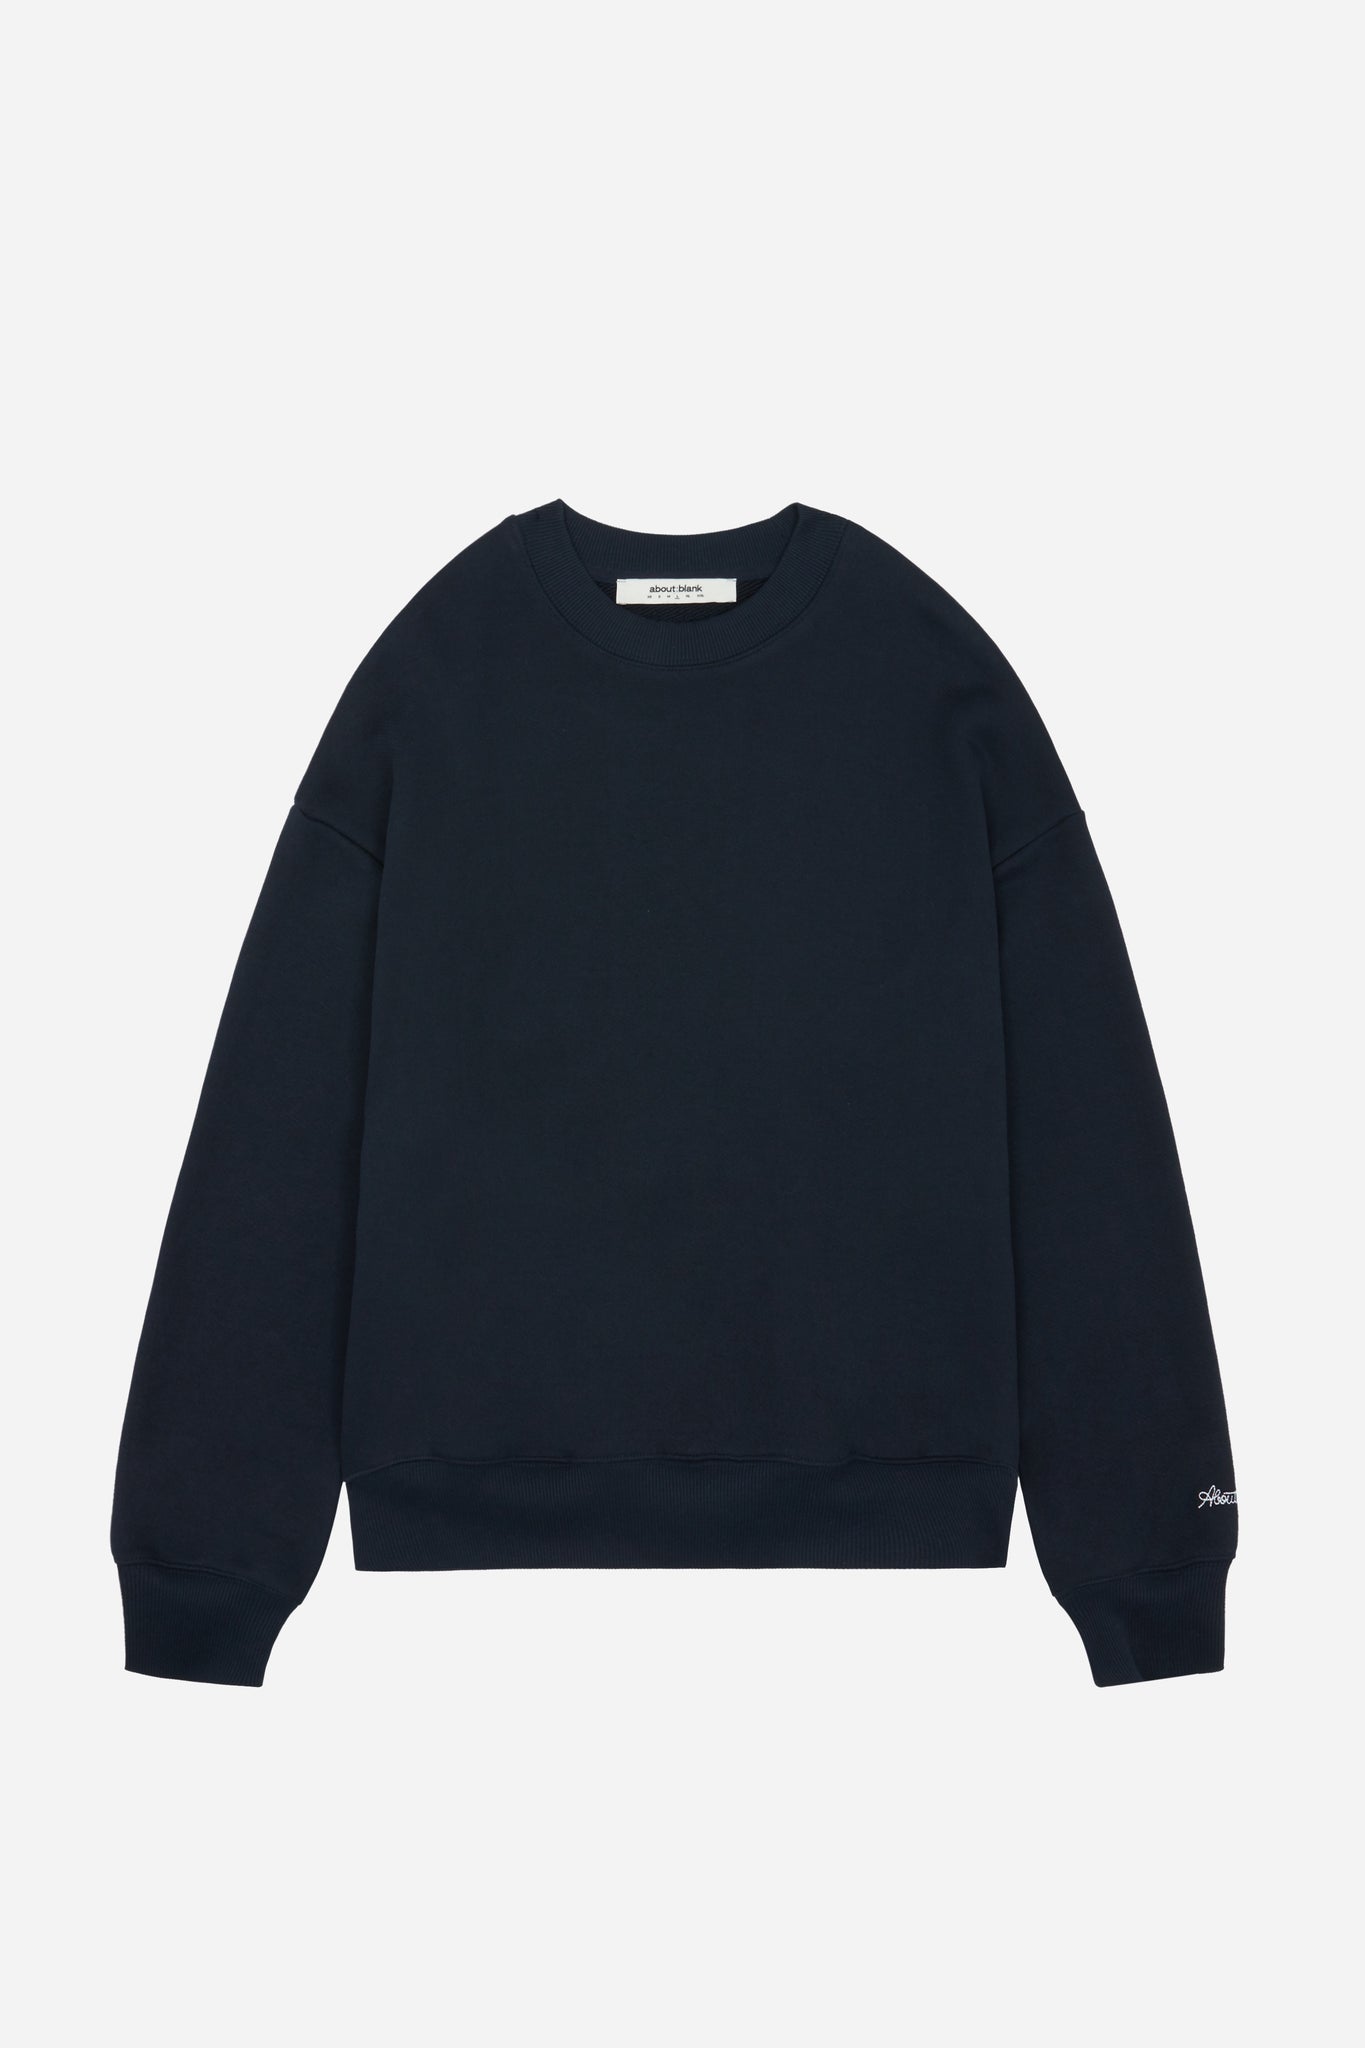 chain stitch sweatshirt french navy/ecru